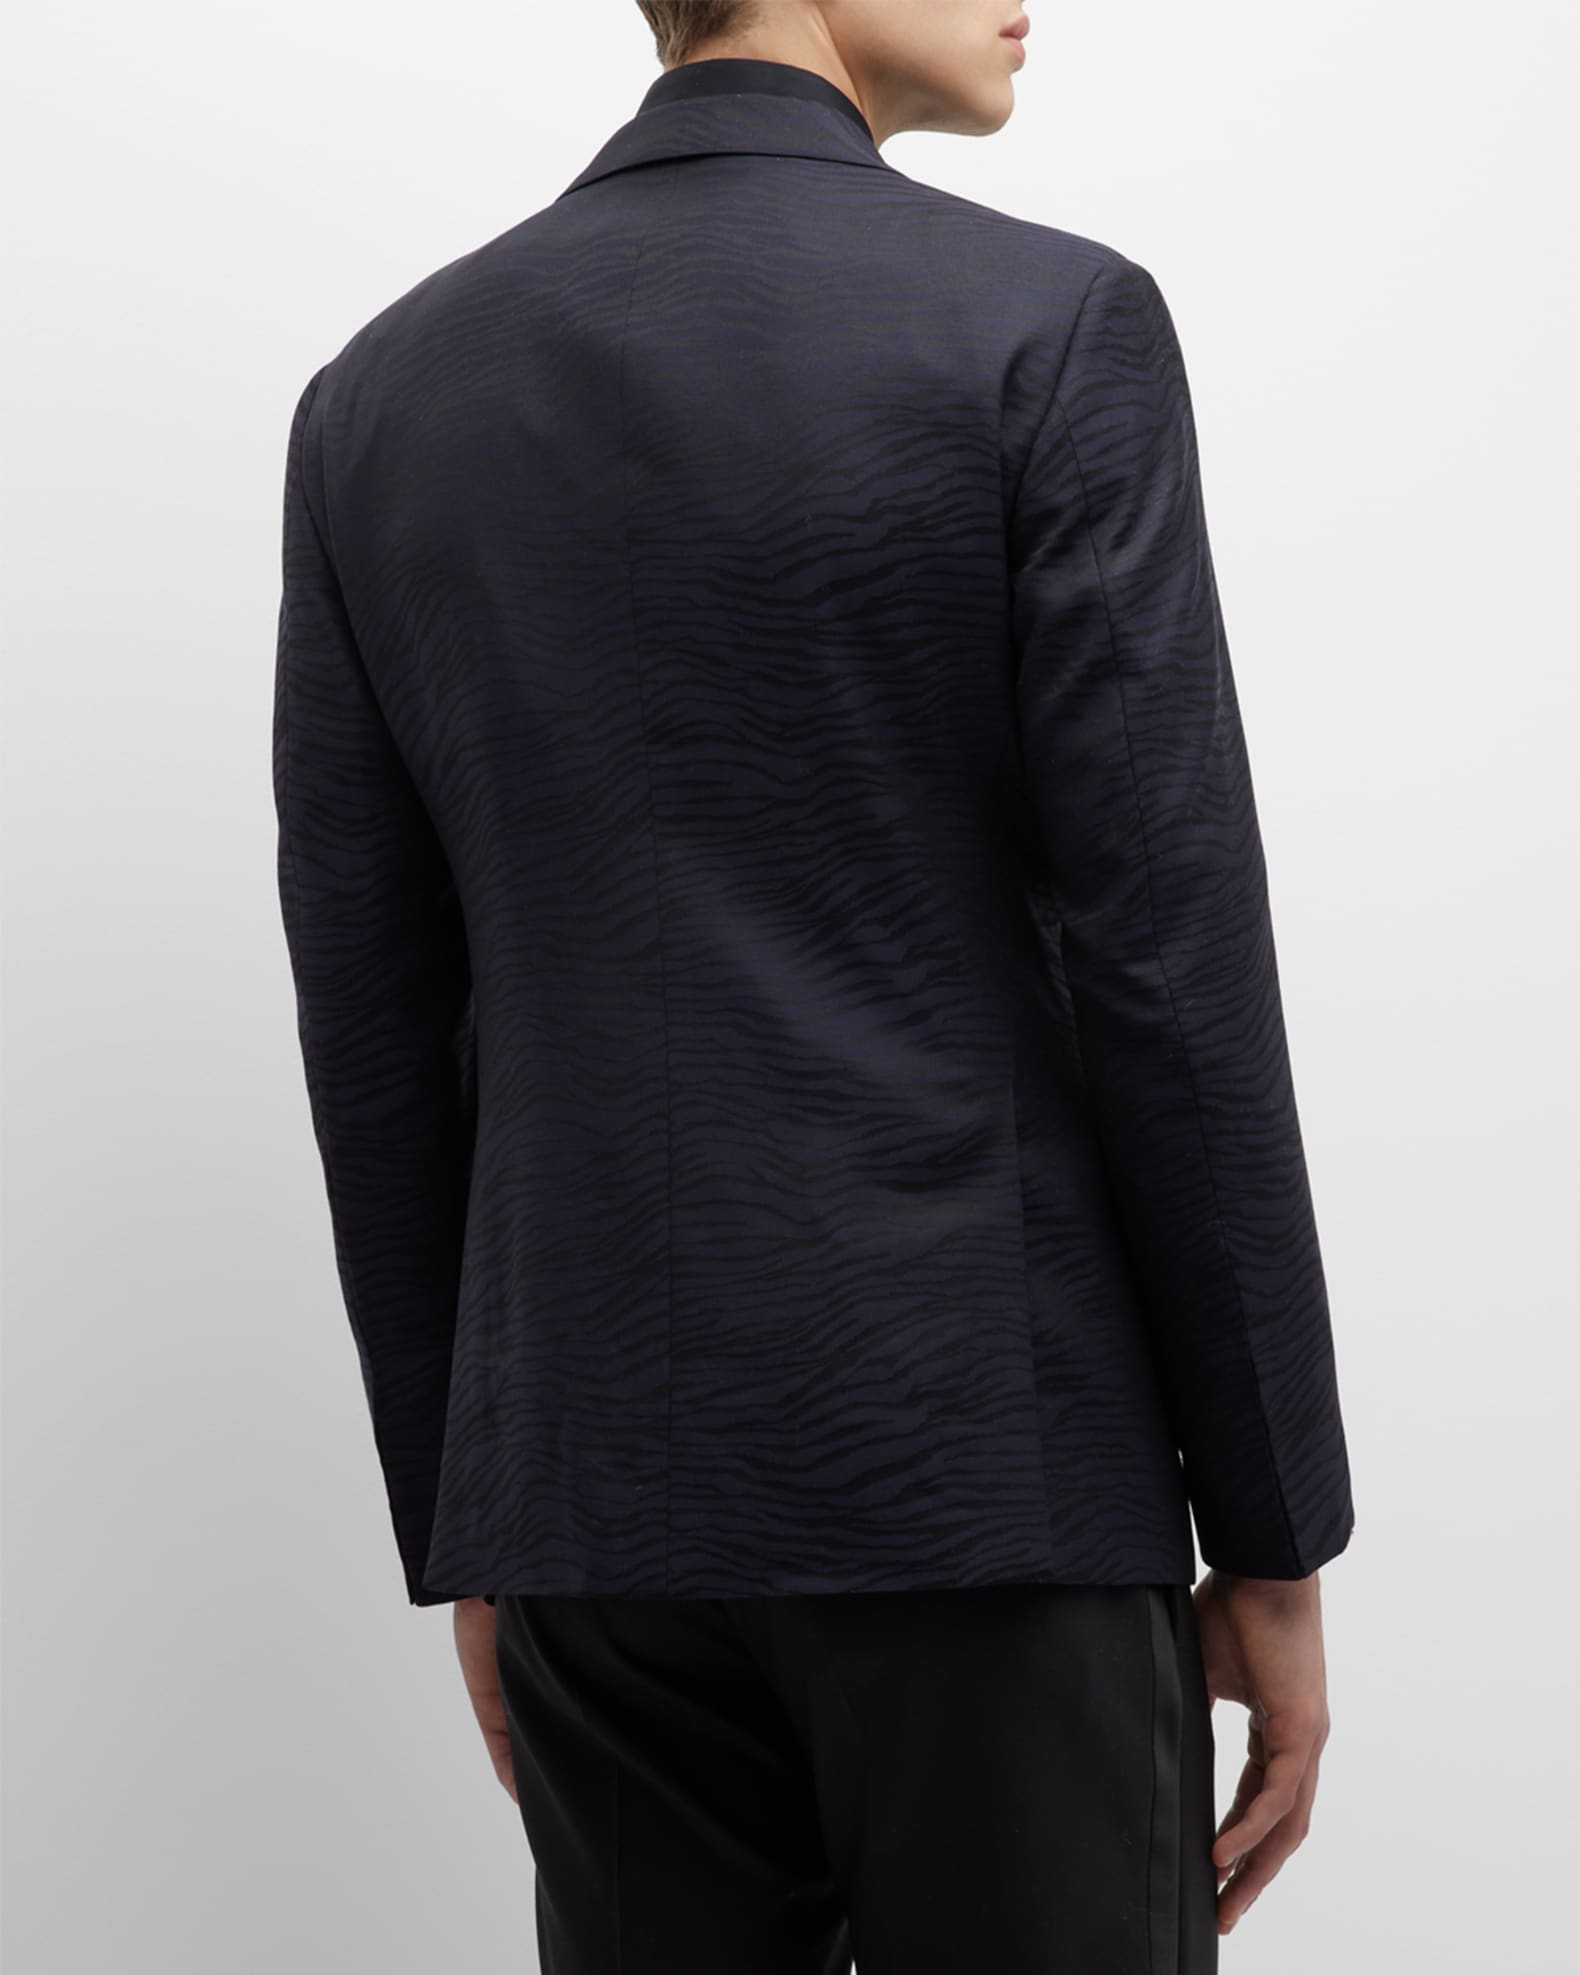 Giorgio Armani Men's Patterned Wool-Blend Dinner Jacket | Neiman Marcus